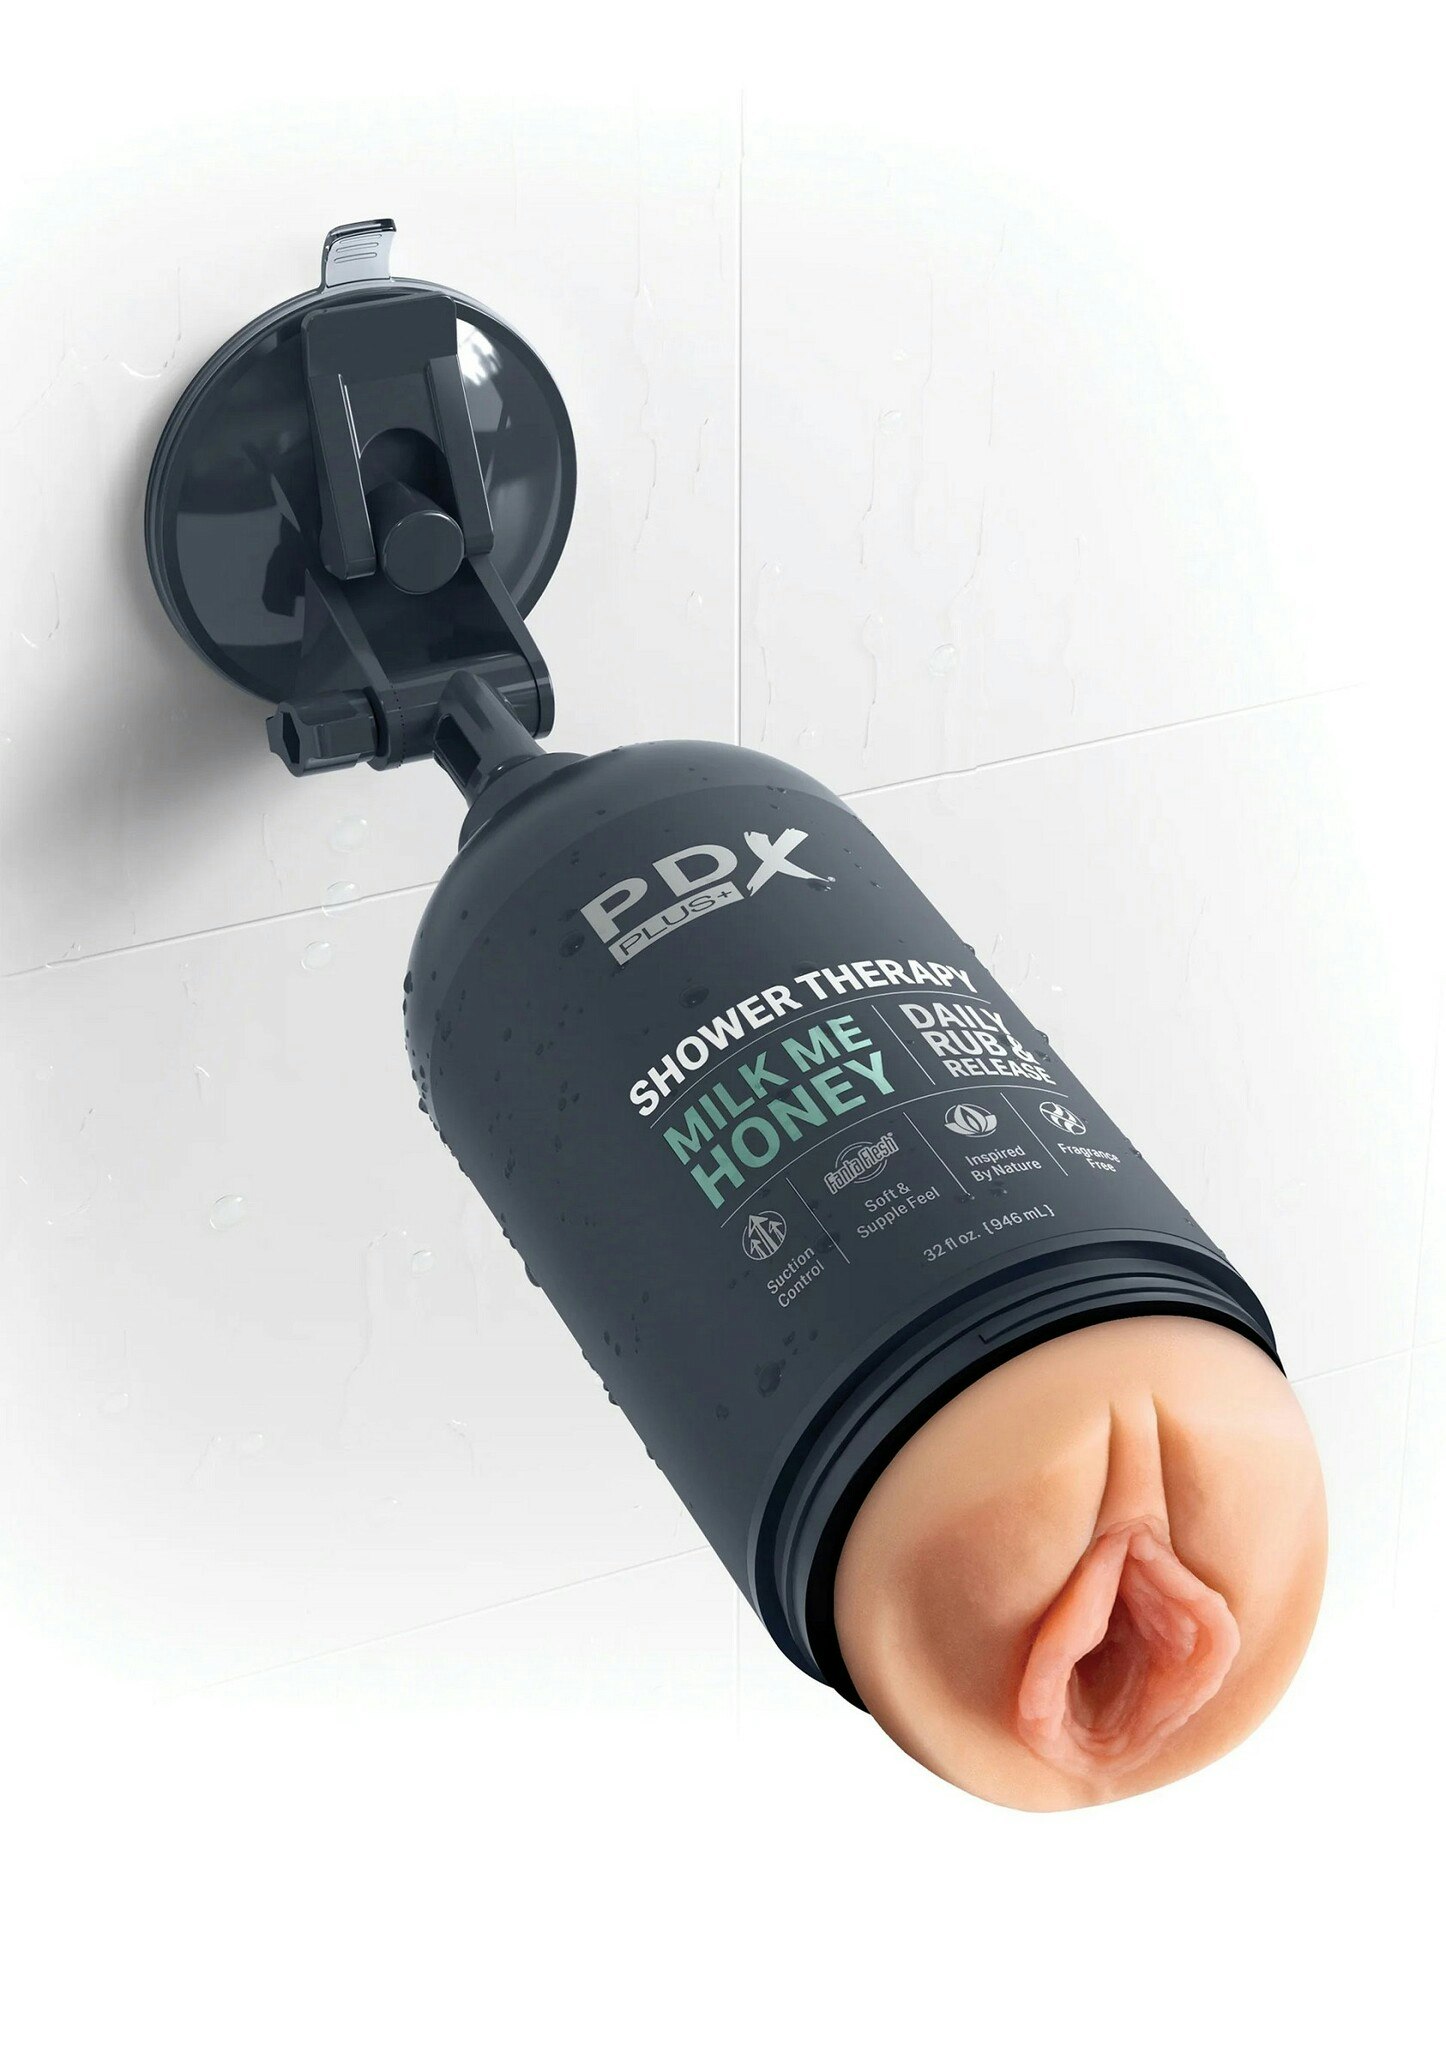 PDX Plus - Shower Therapy Milk Me Honey, Light skin tone